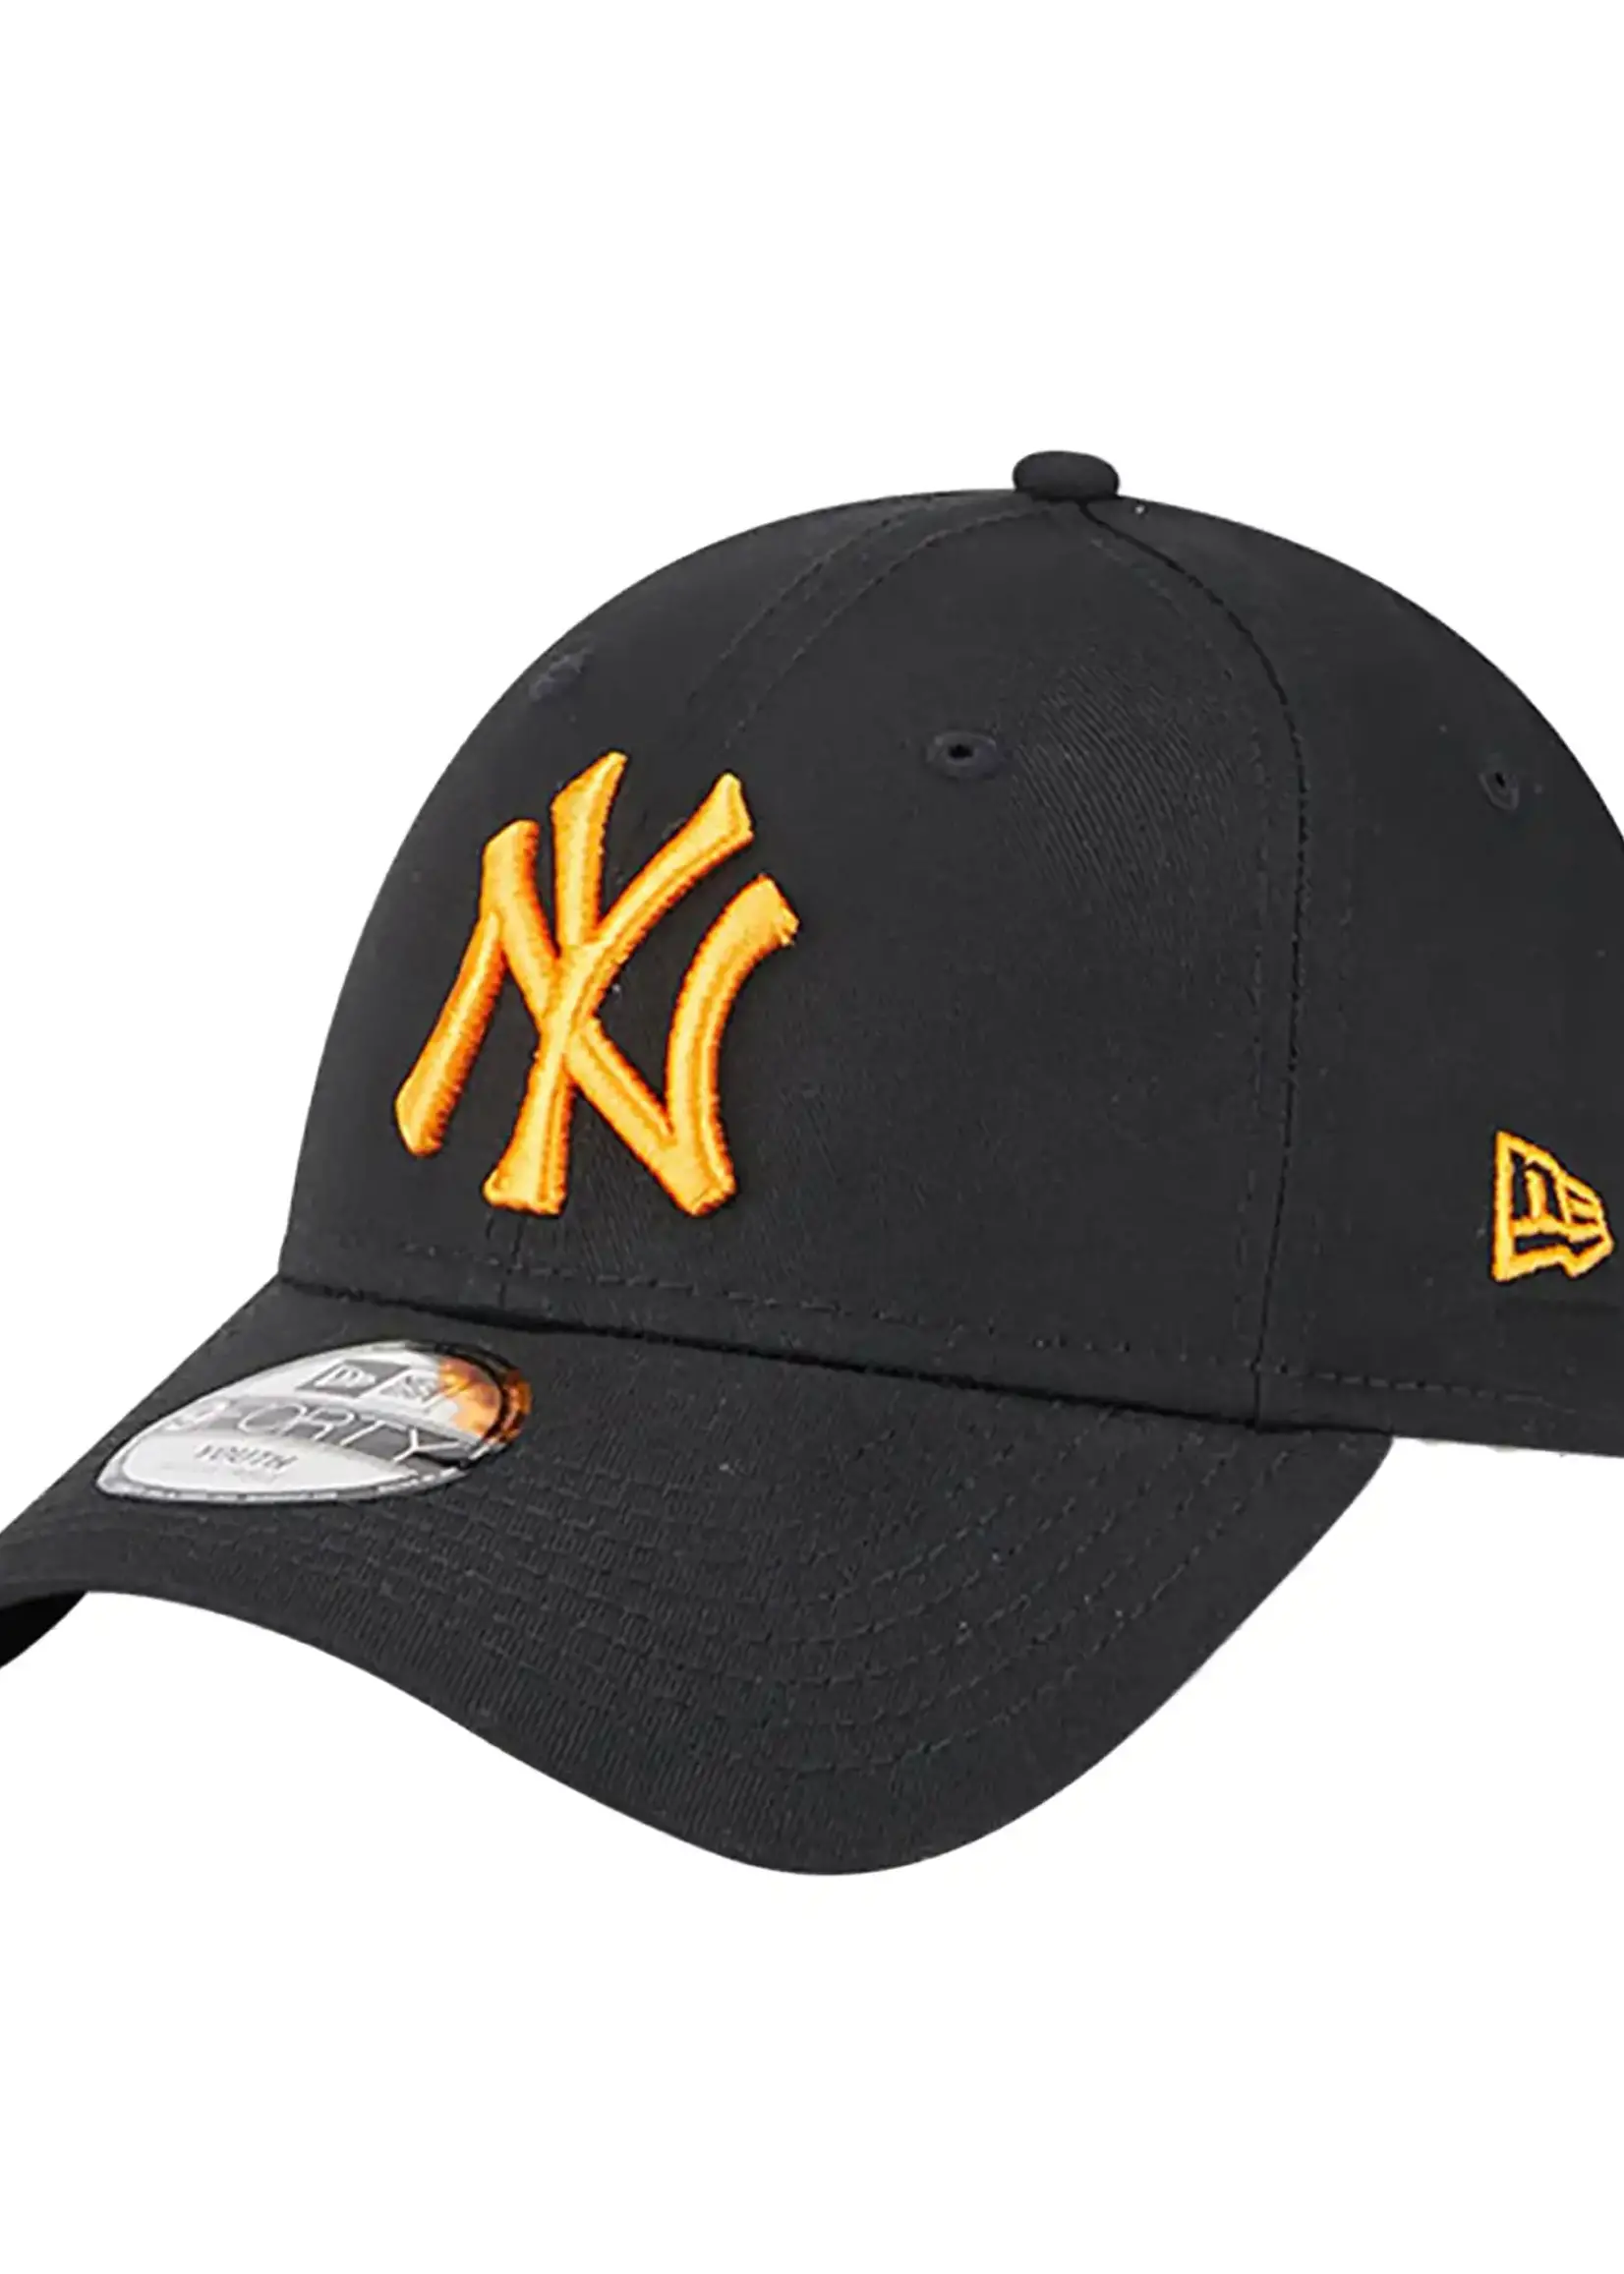 New Era New York Yankees  9Forty Youth Cap Black Orange